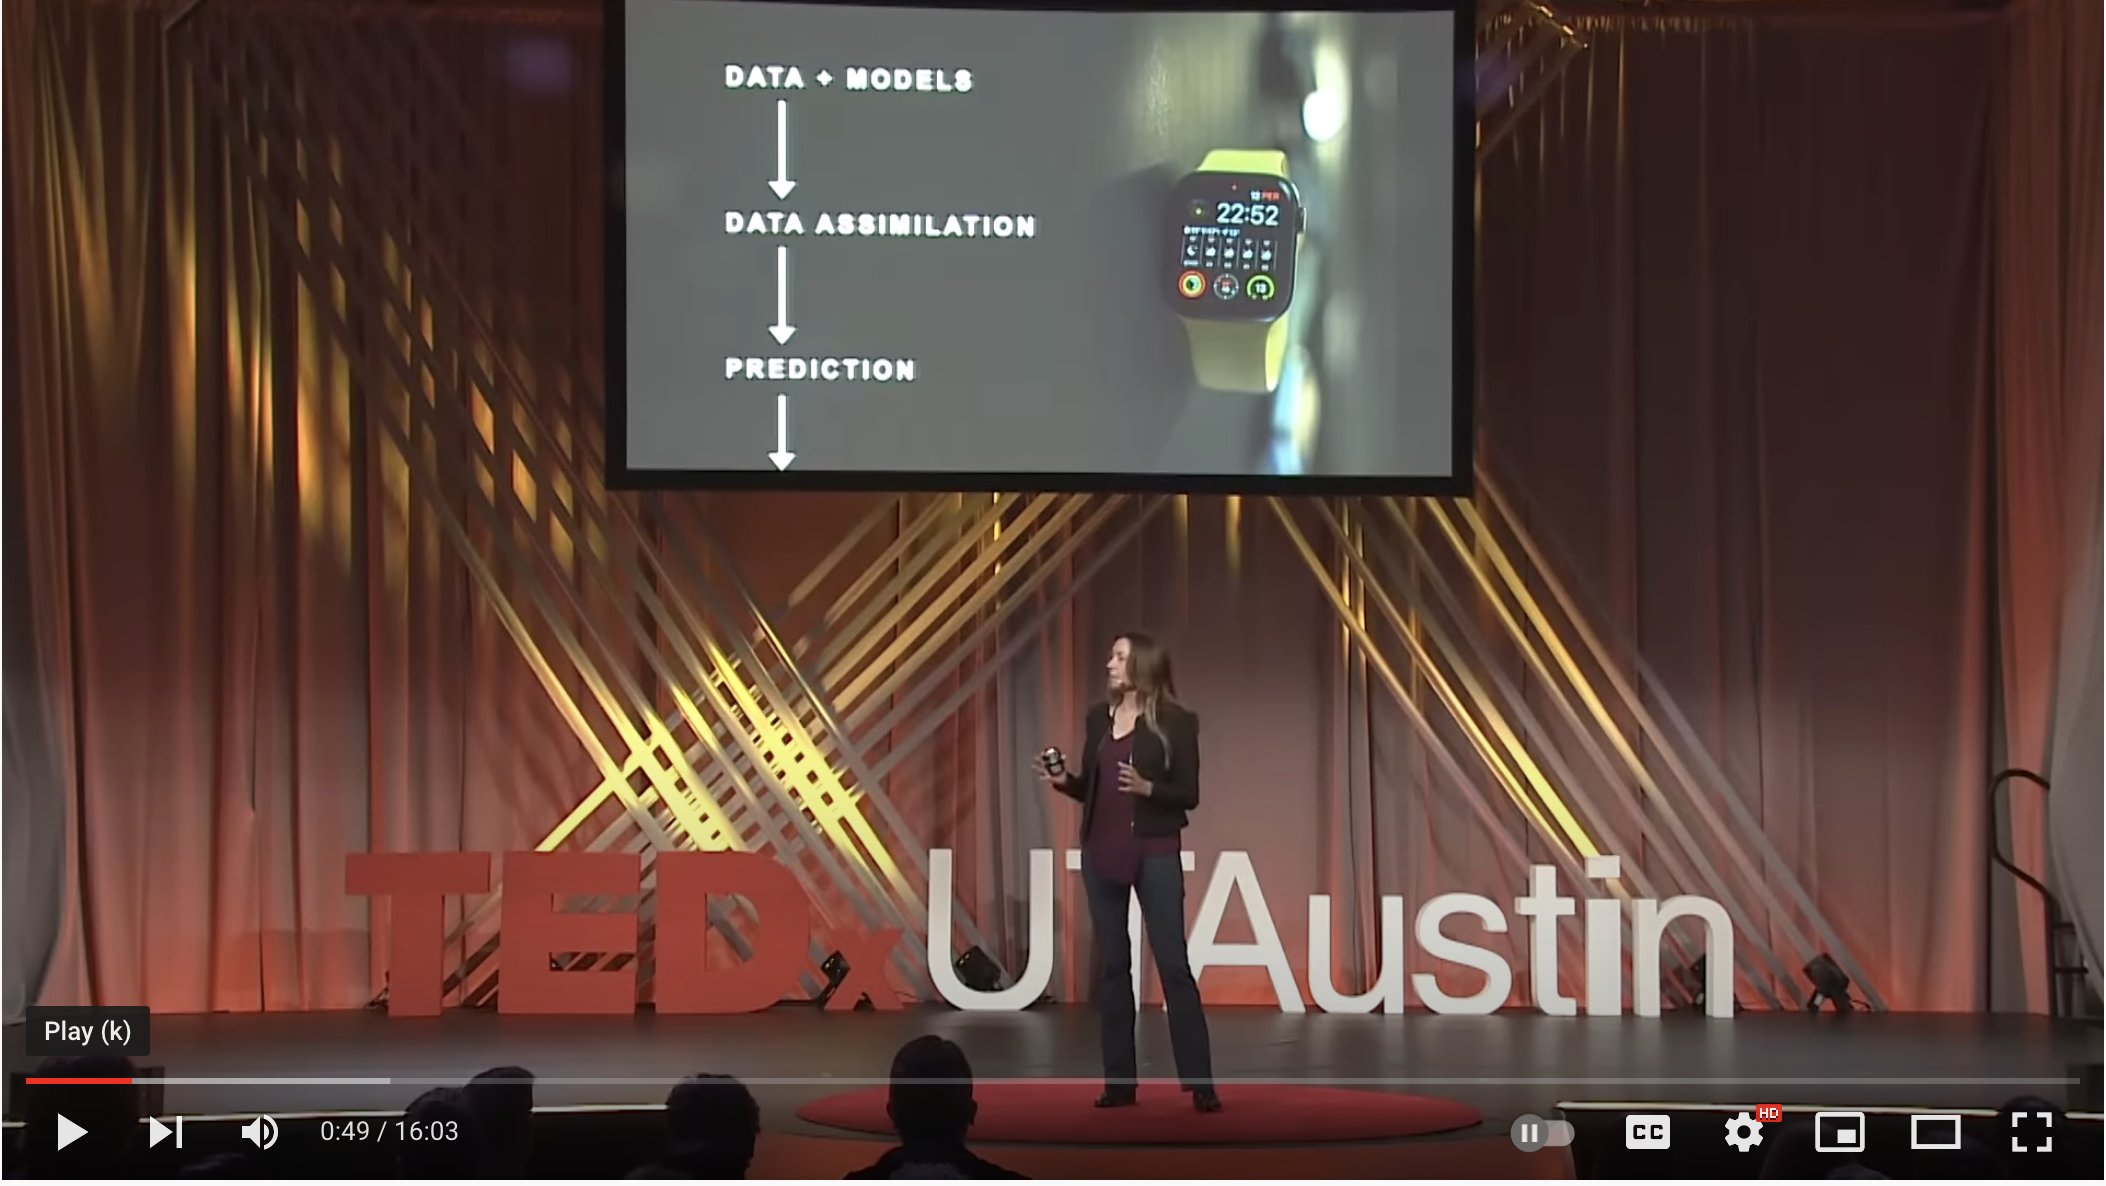 Presenting Digital twins at TEDxUTAustin in March 2022